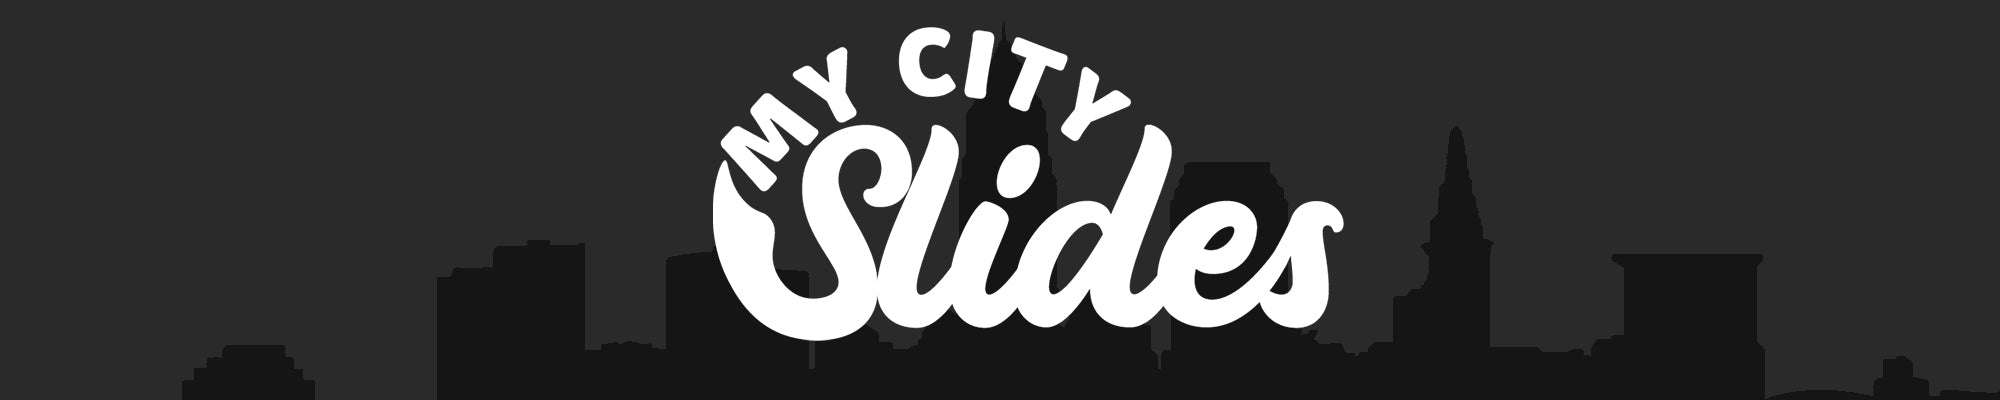 My City Slides-Cleveland